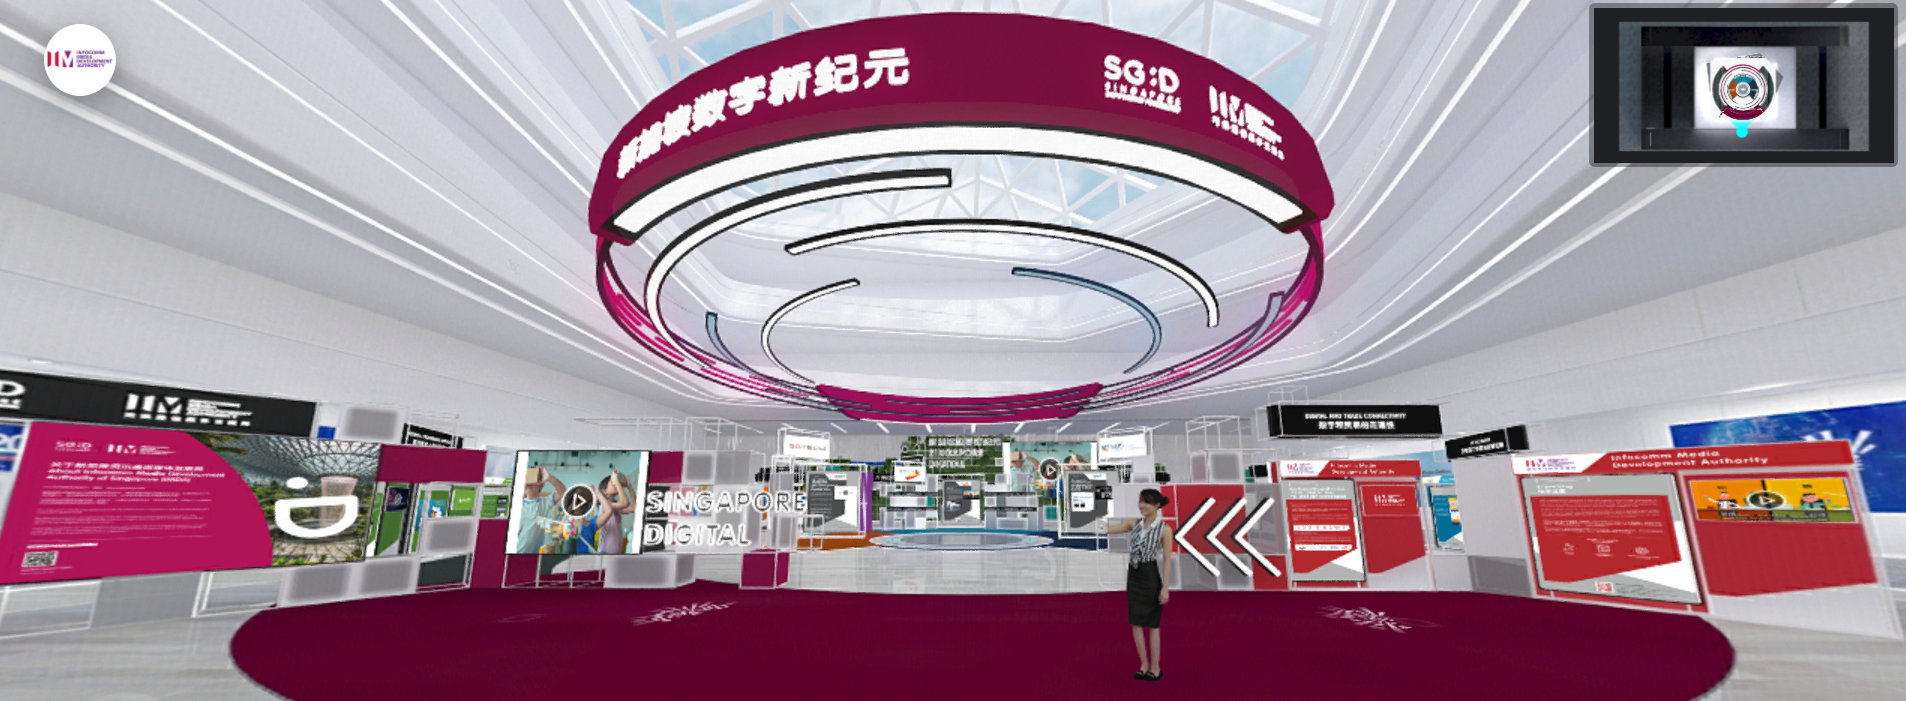 Smart China Expo 2020 SG Pavilion